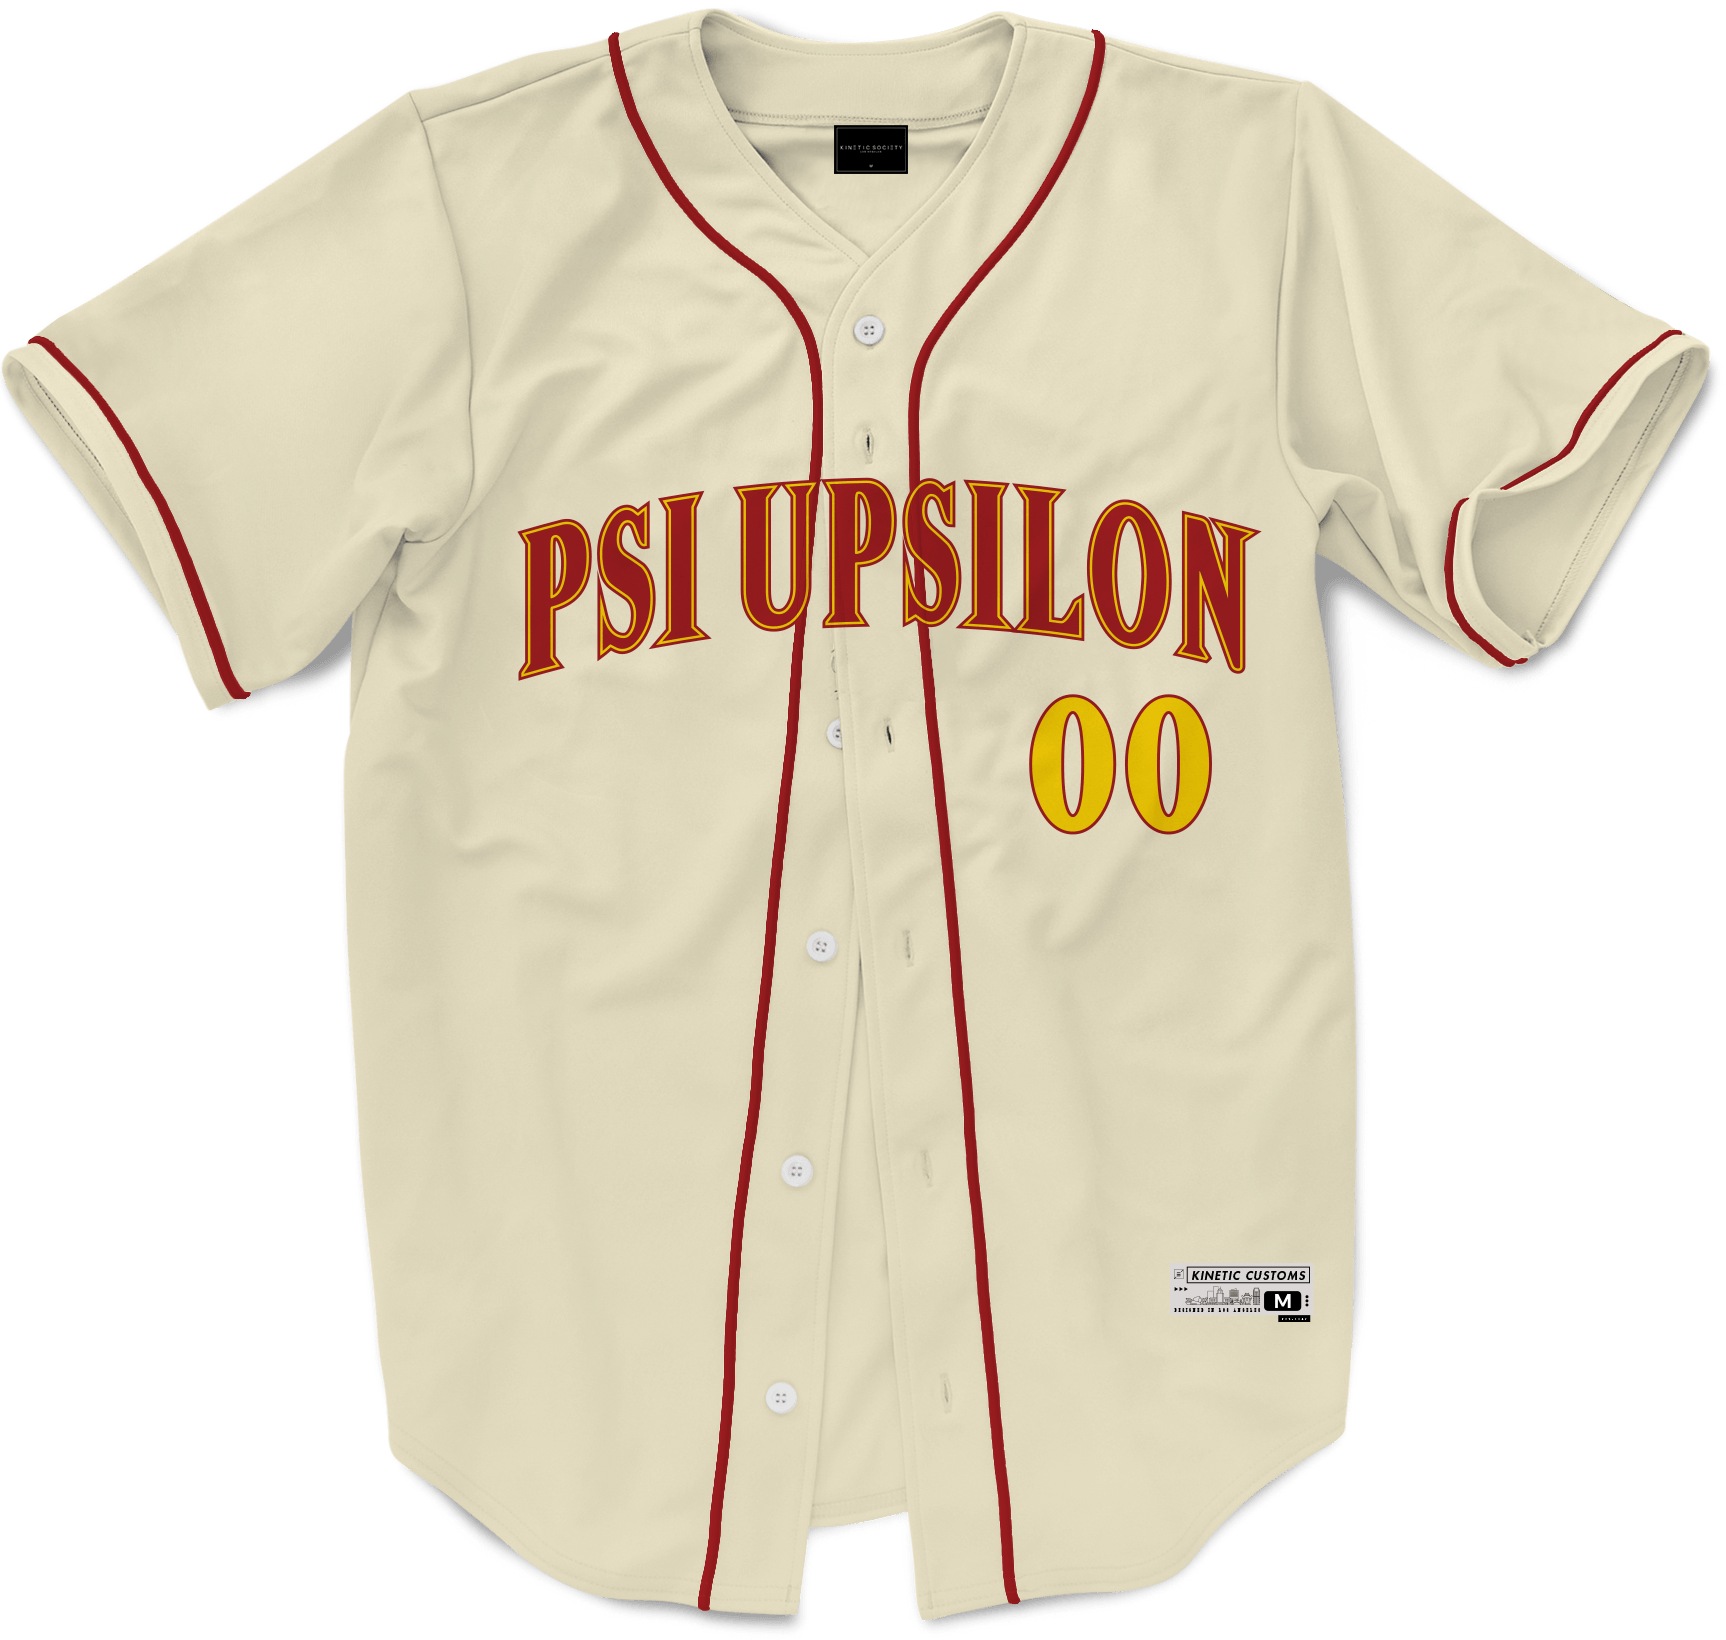 Psi Upsilon - Cream Baseball Jersey Premium Baseball Kinetic Society LLC 